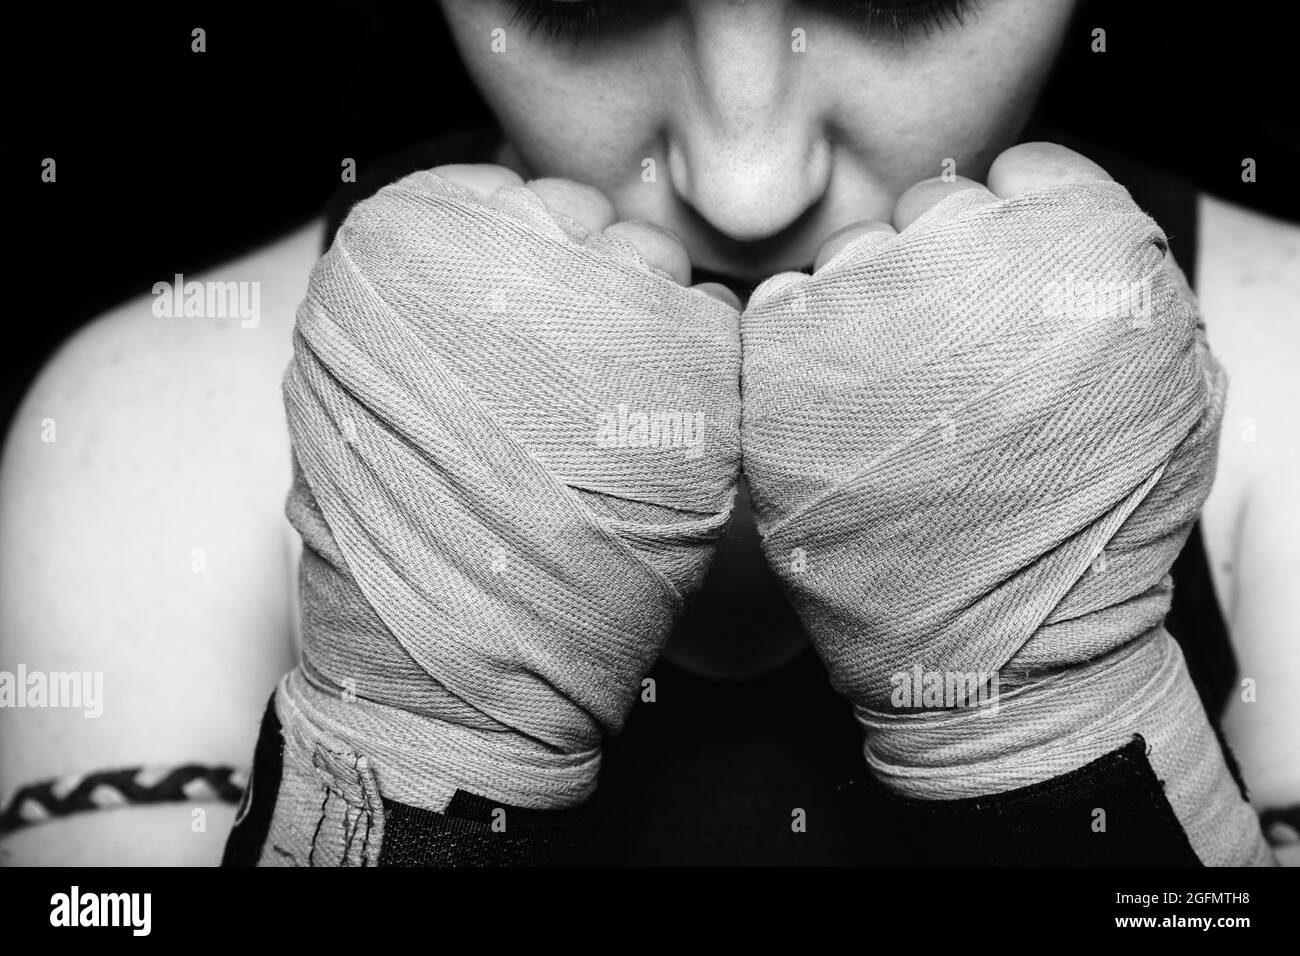 Muay Thai fighter girl preparing for battle. Closeup black and white portrait against black background. Stock Photo